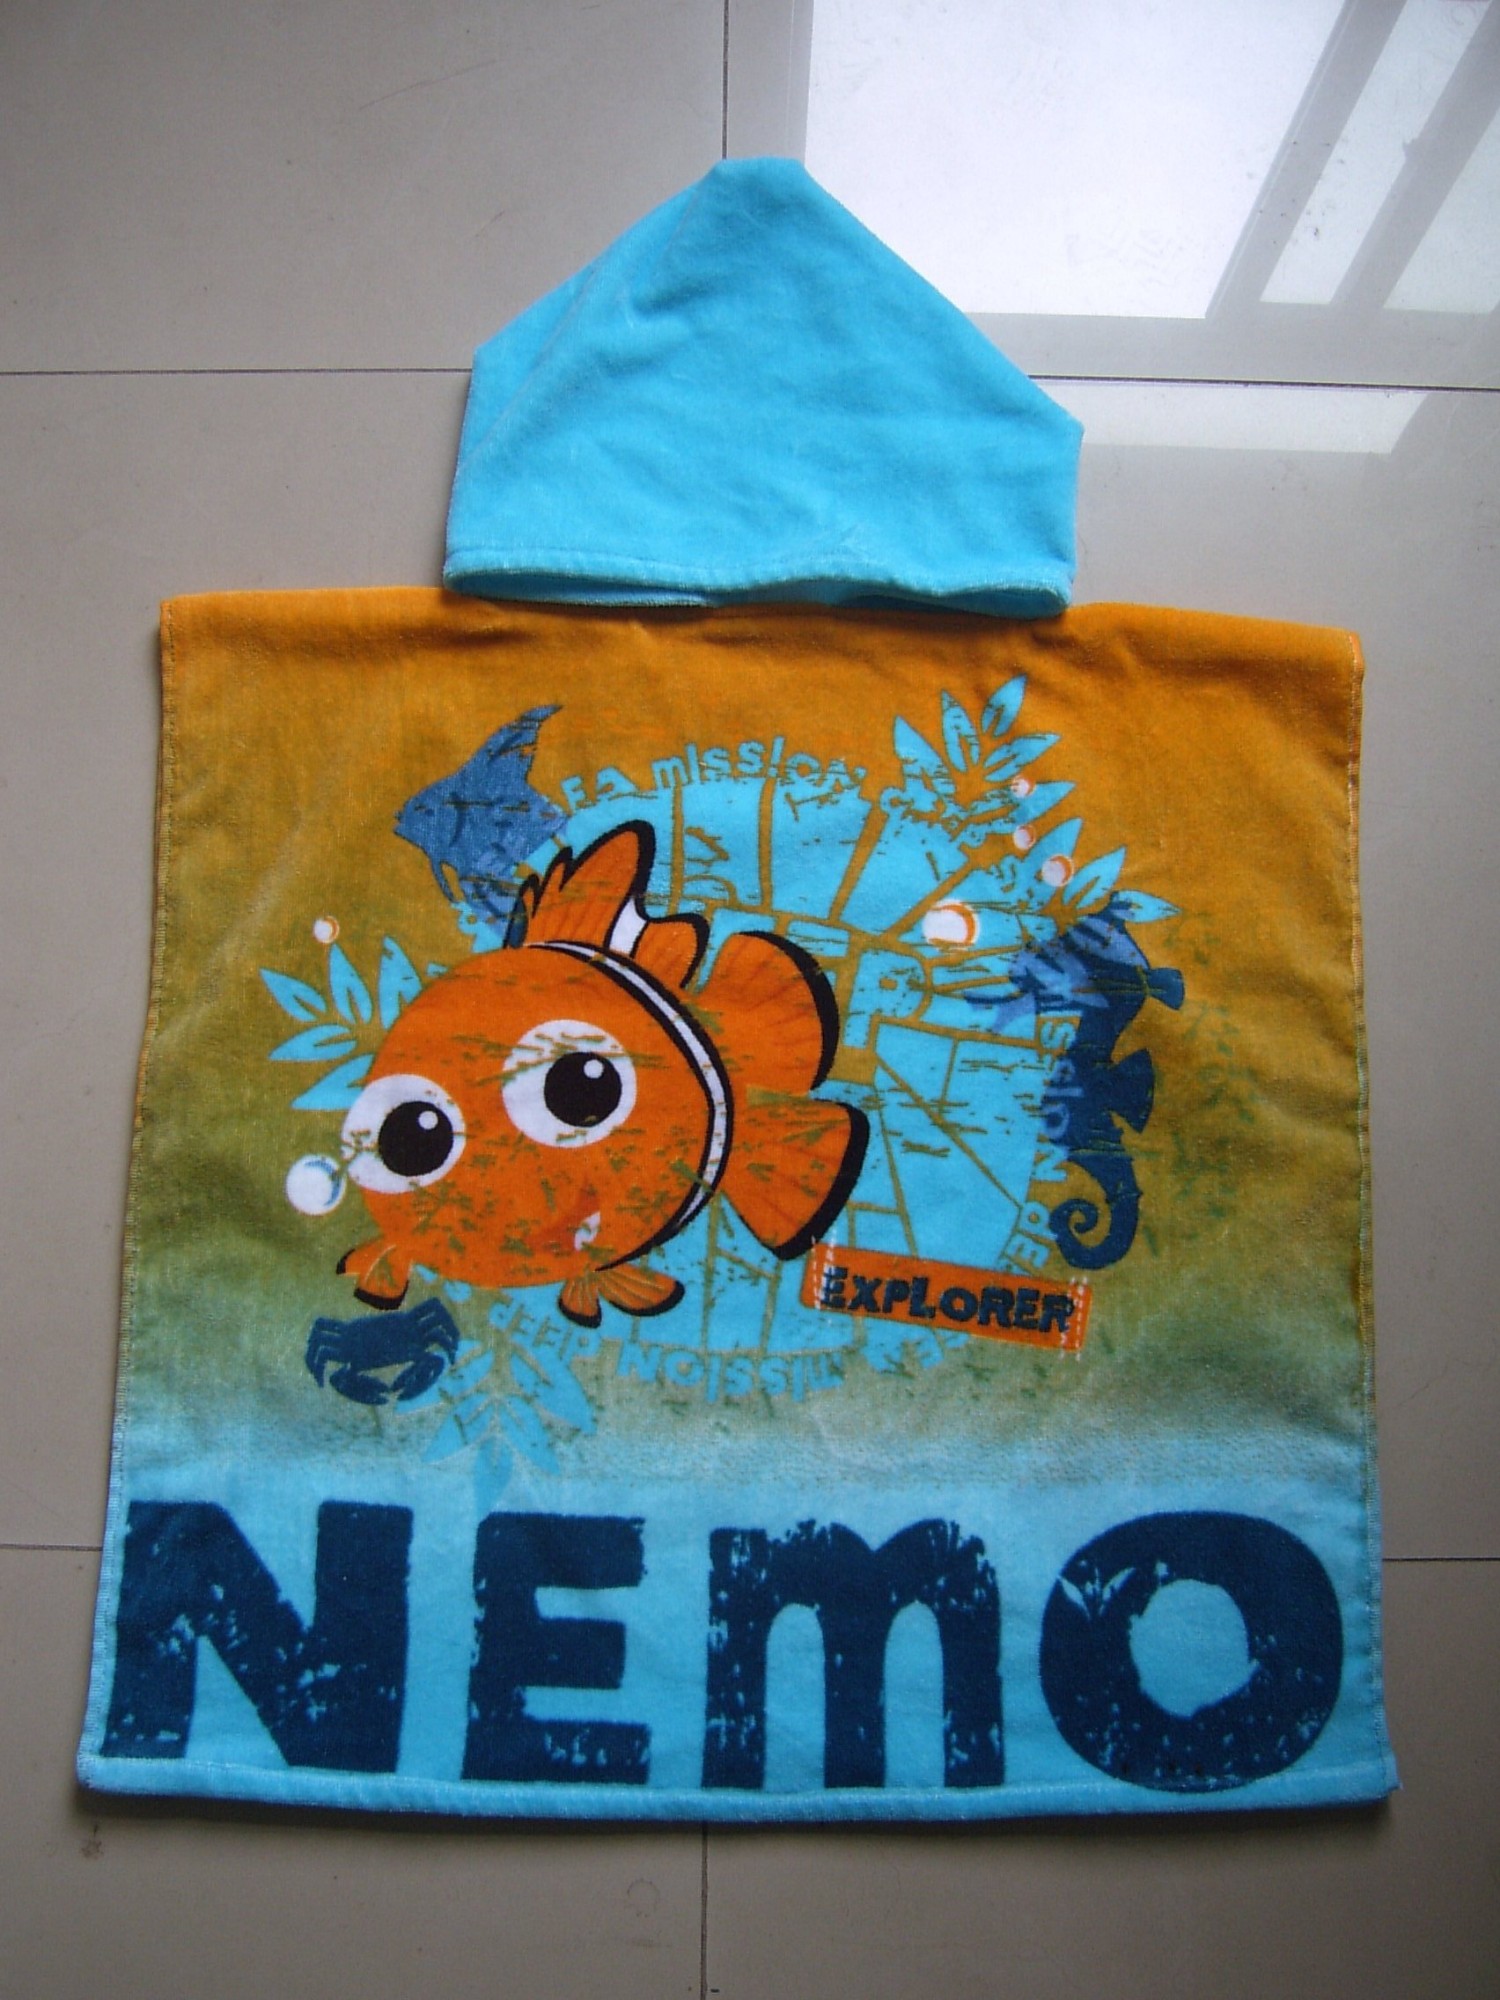 Kids character hooded towel